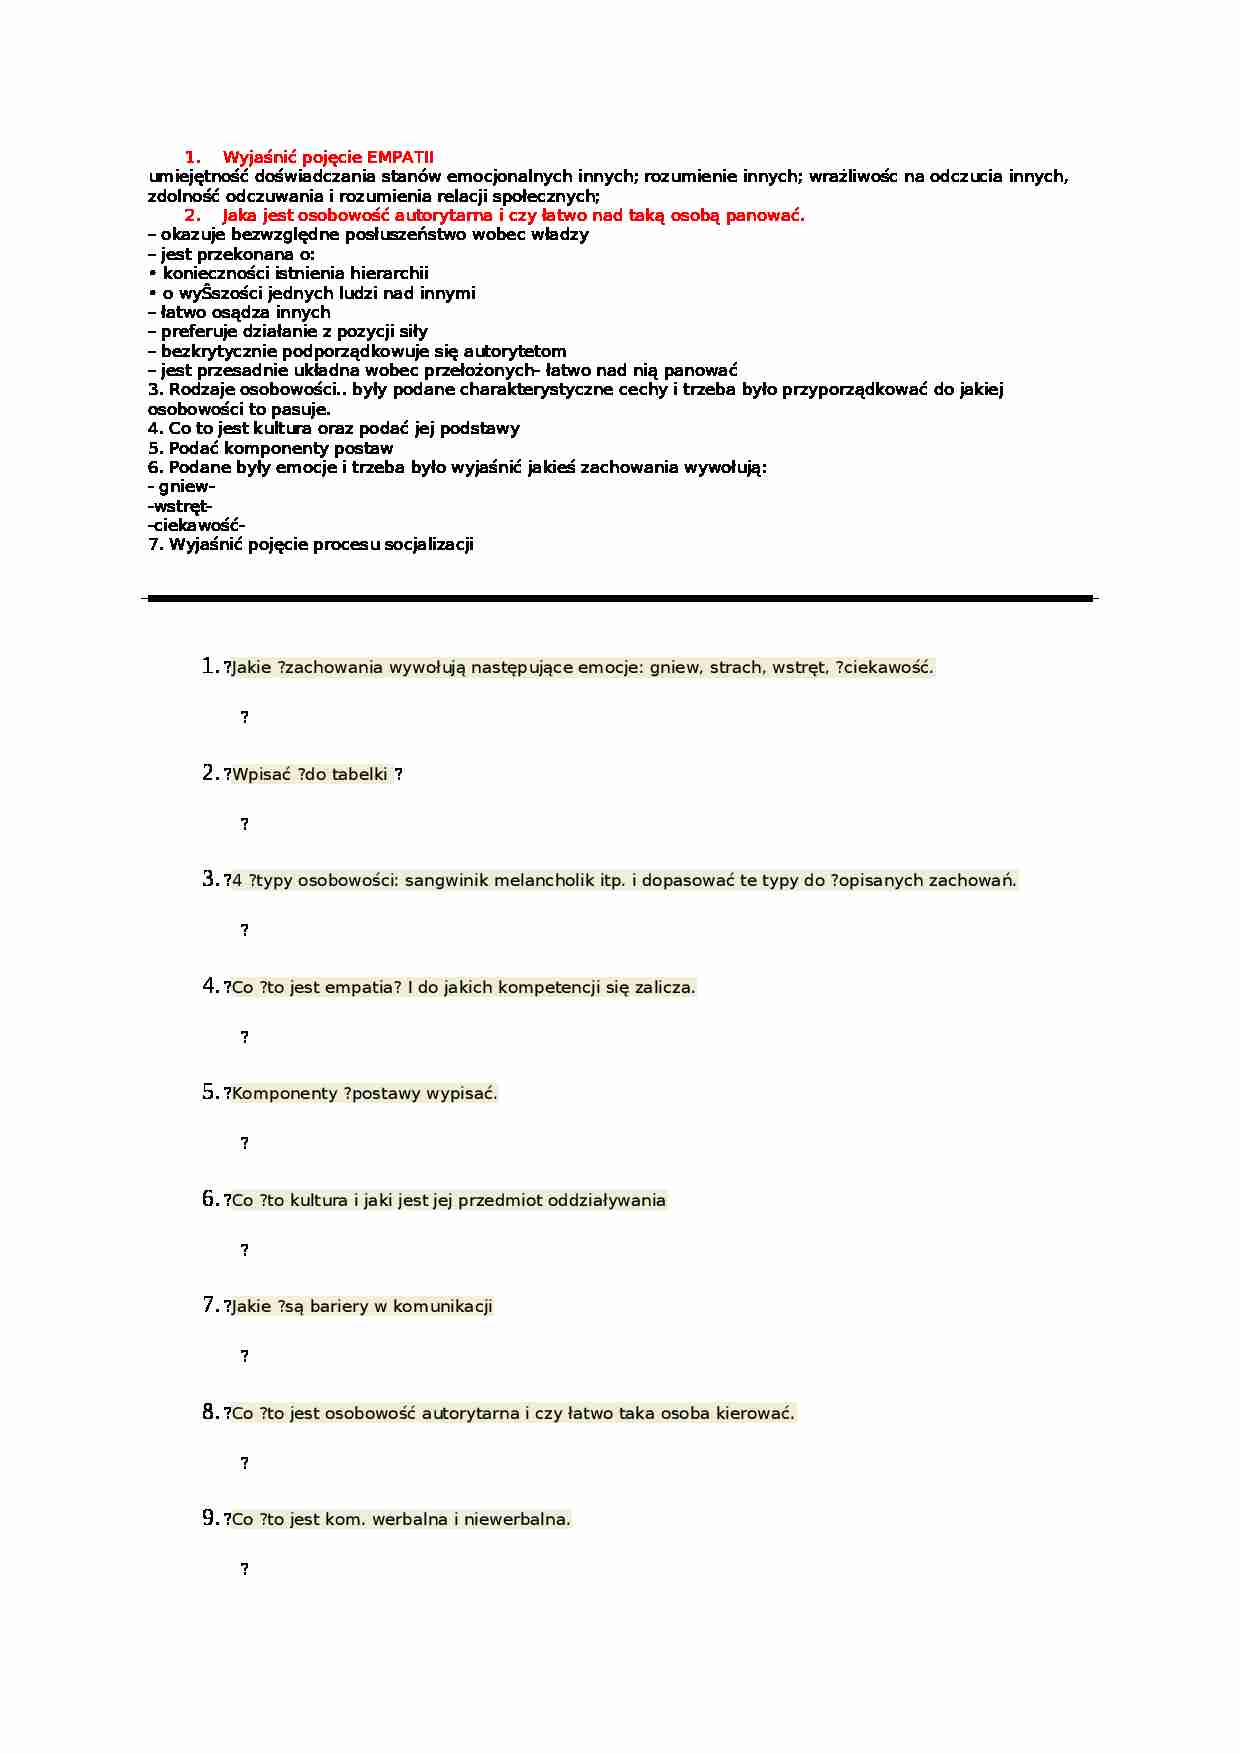 Podstawy Psychologii i Socjologii - pytania na egzamin  (sem 1) - strona 1